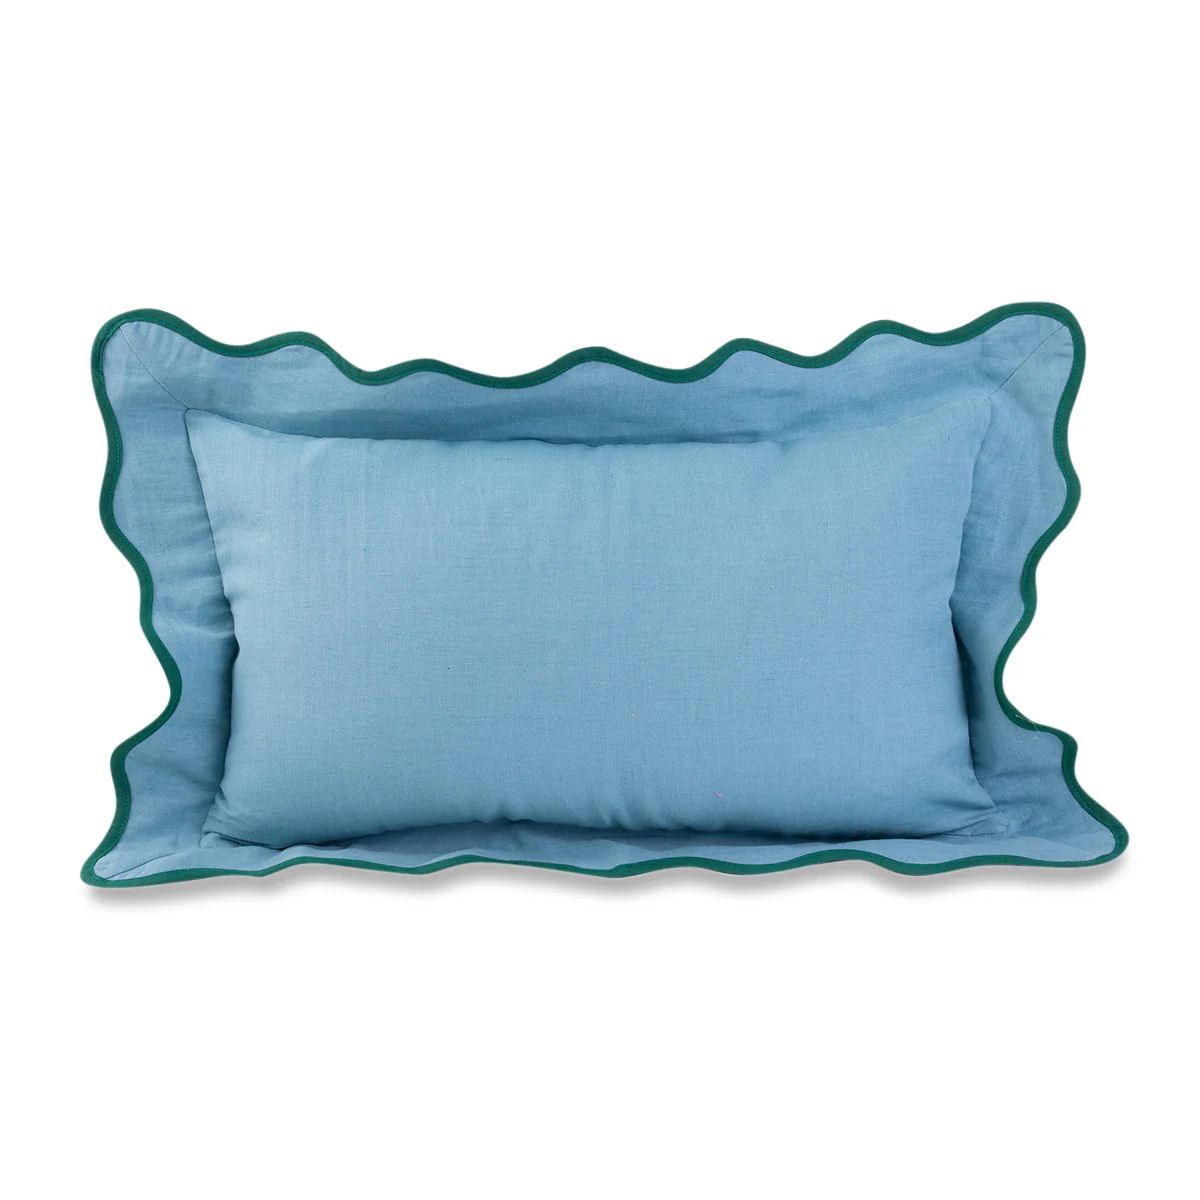 Furbish Studio - Darcy Linen Lumbar Pillow - Aqua + Green | Furbish Studio